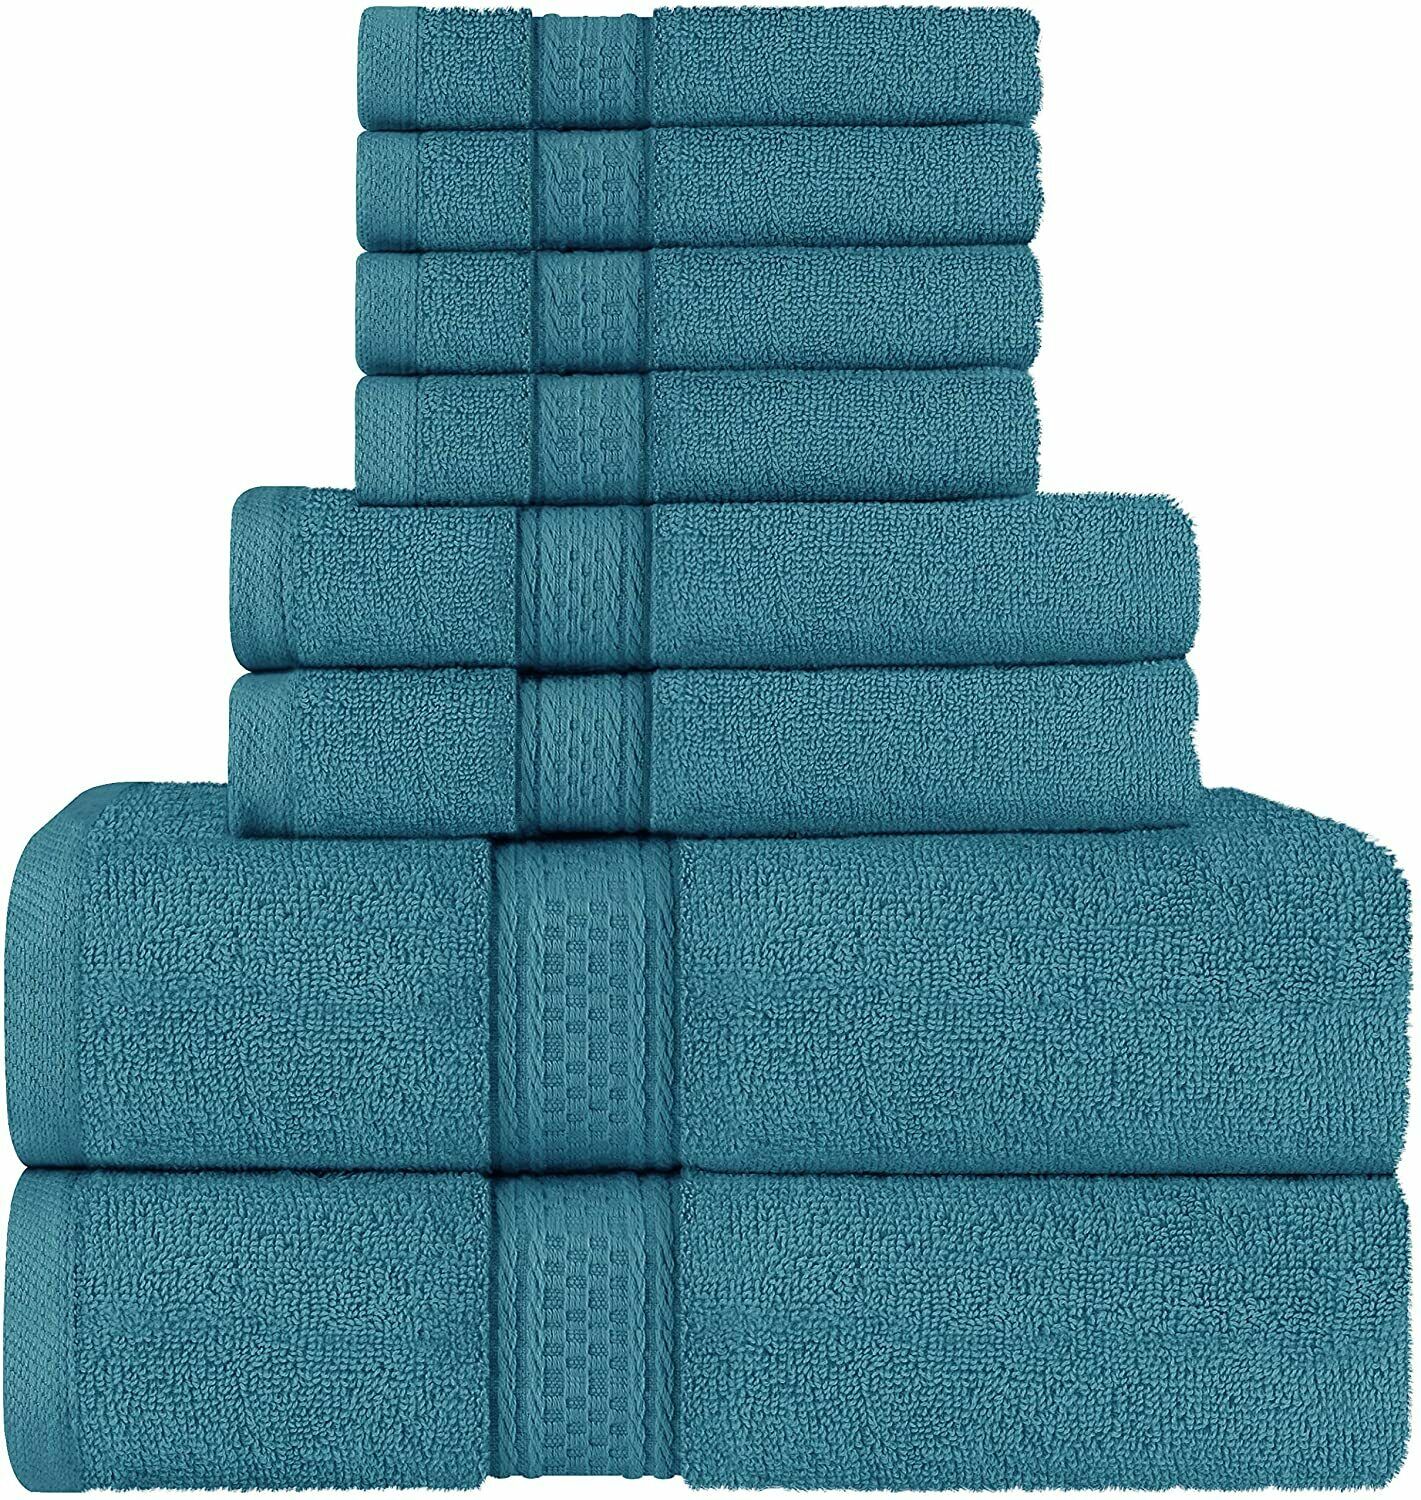 8 Piece Towel Set Includes Bath Towel Hand Towel Washcloth 600 Gsm Utopia Towels